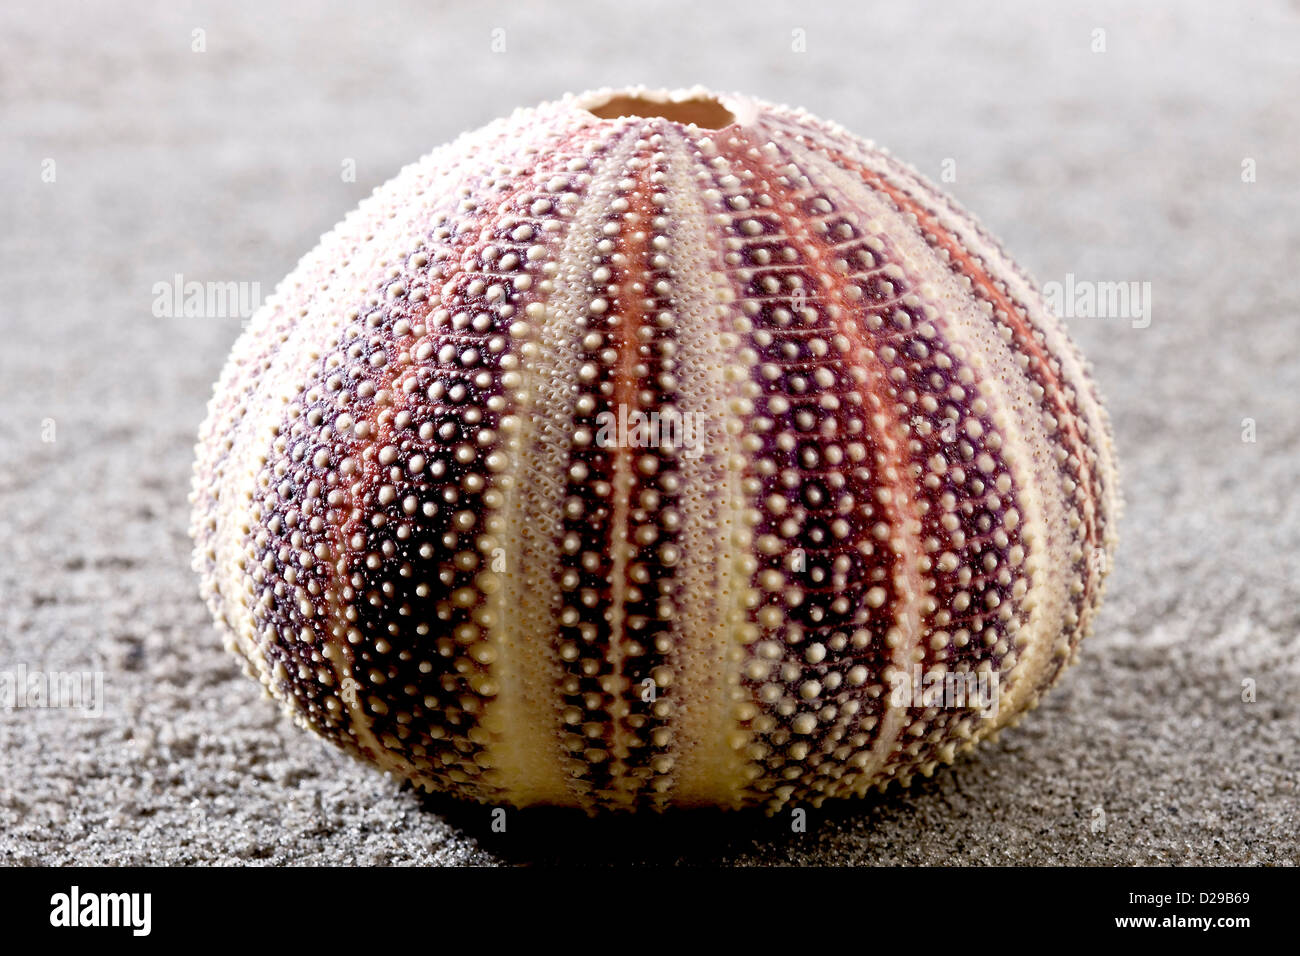 Shell of Sea urchin on the beach Stock Photo